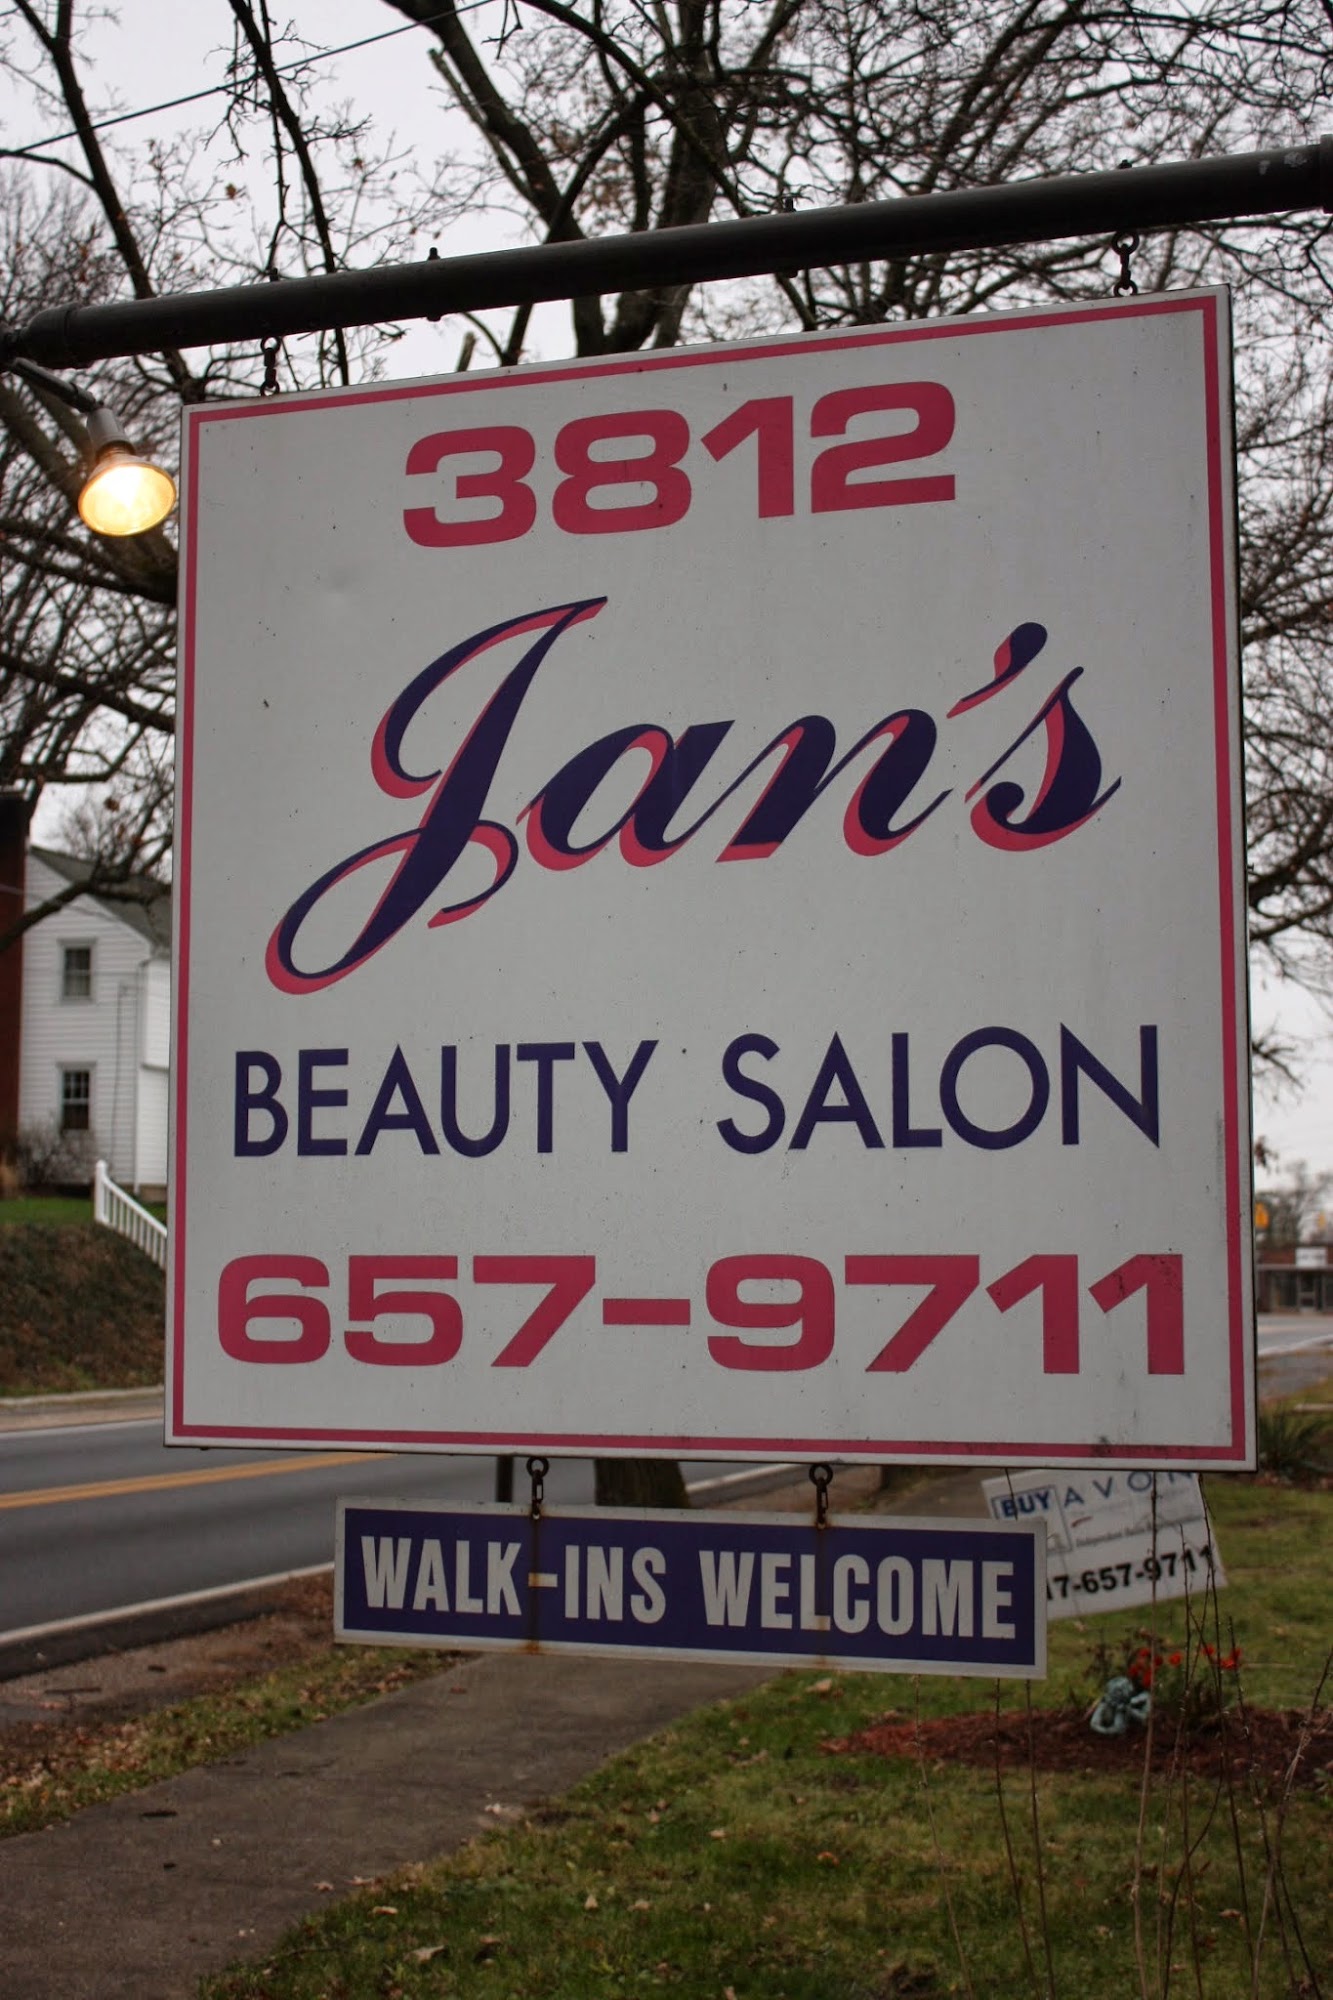 Jan's Beauty Salon